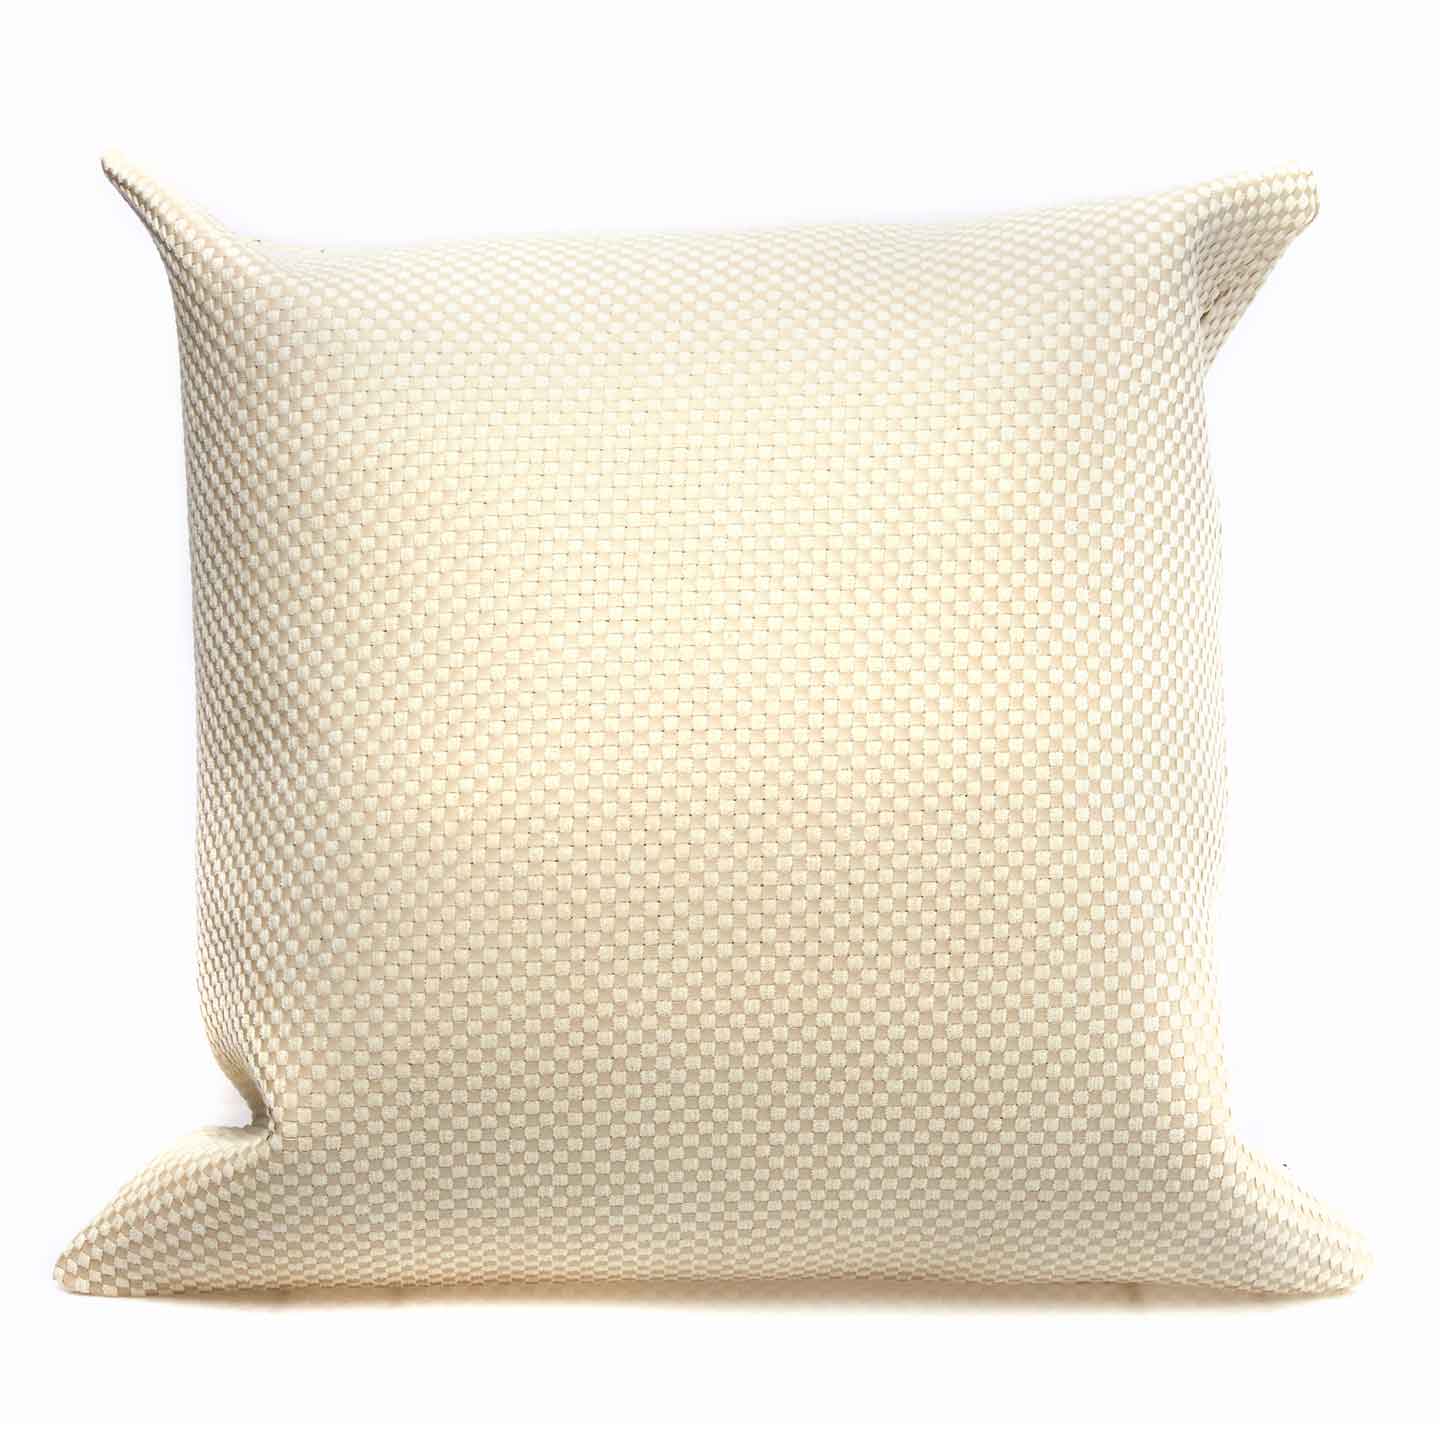 The Randi pillow by Beau Home